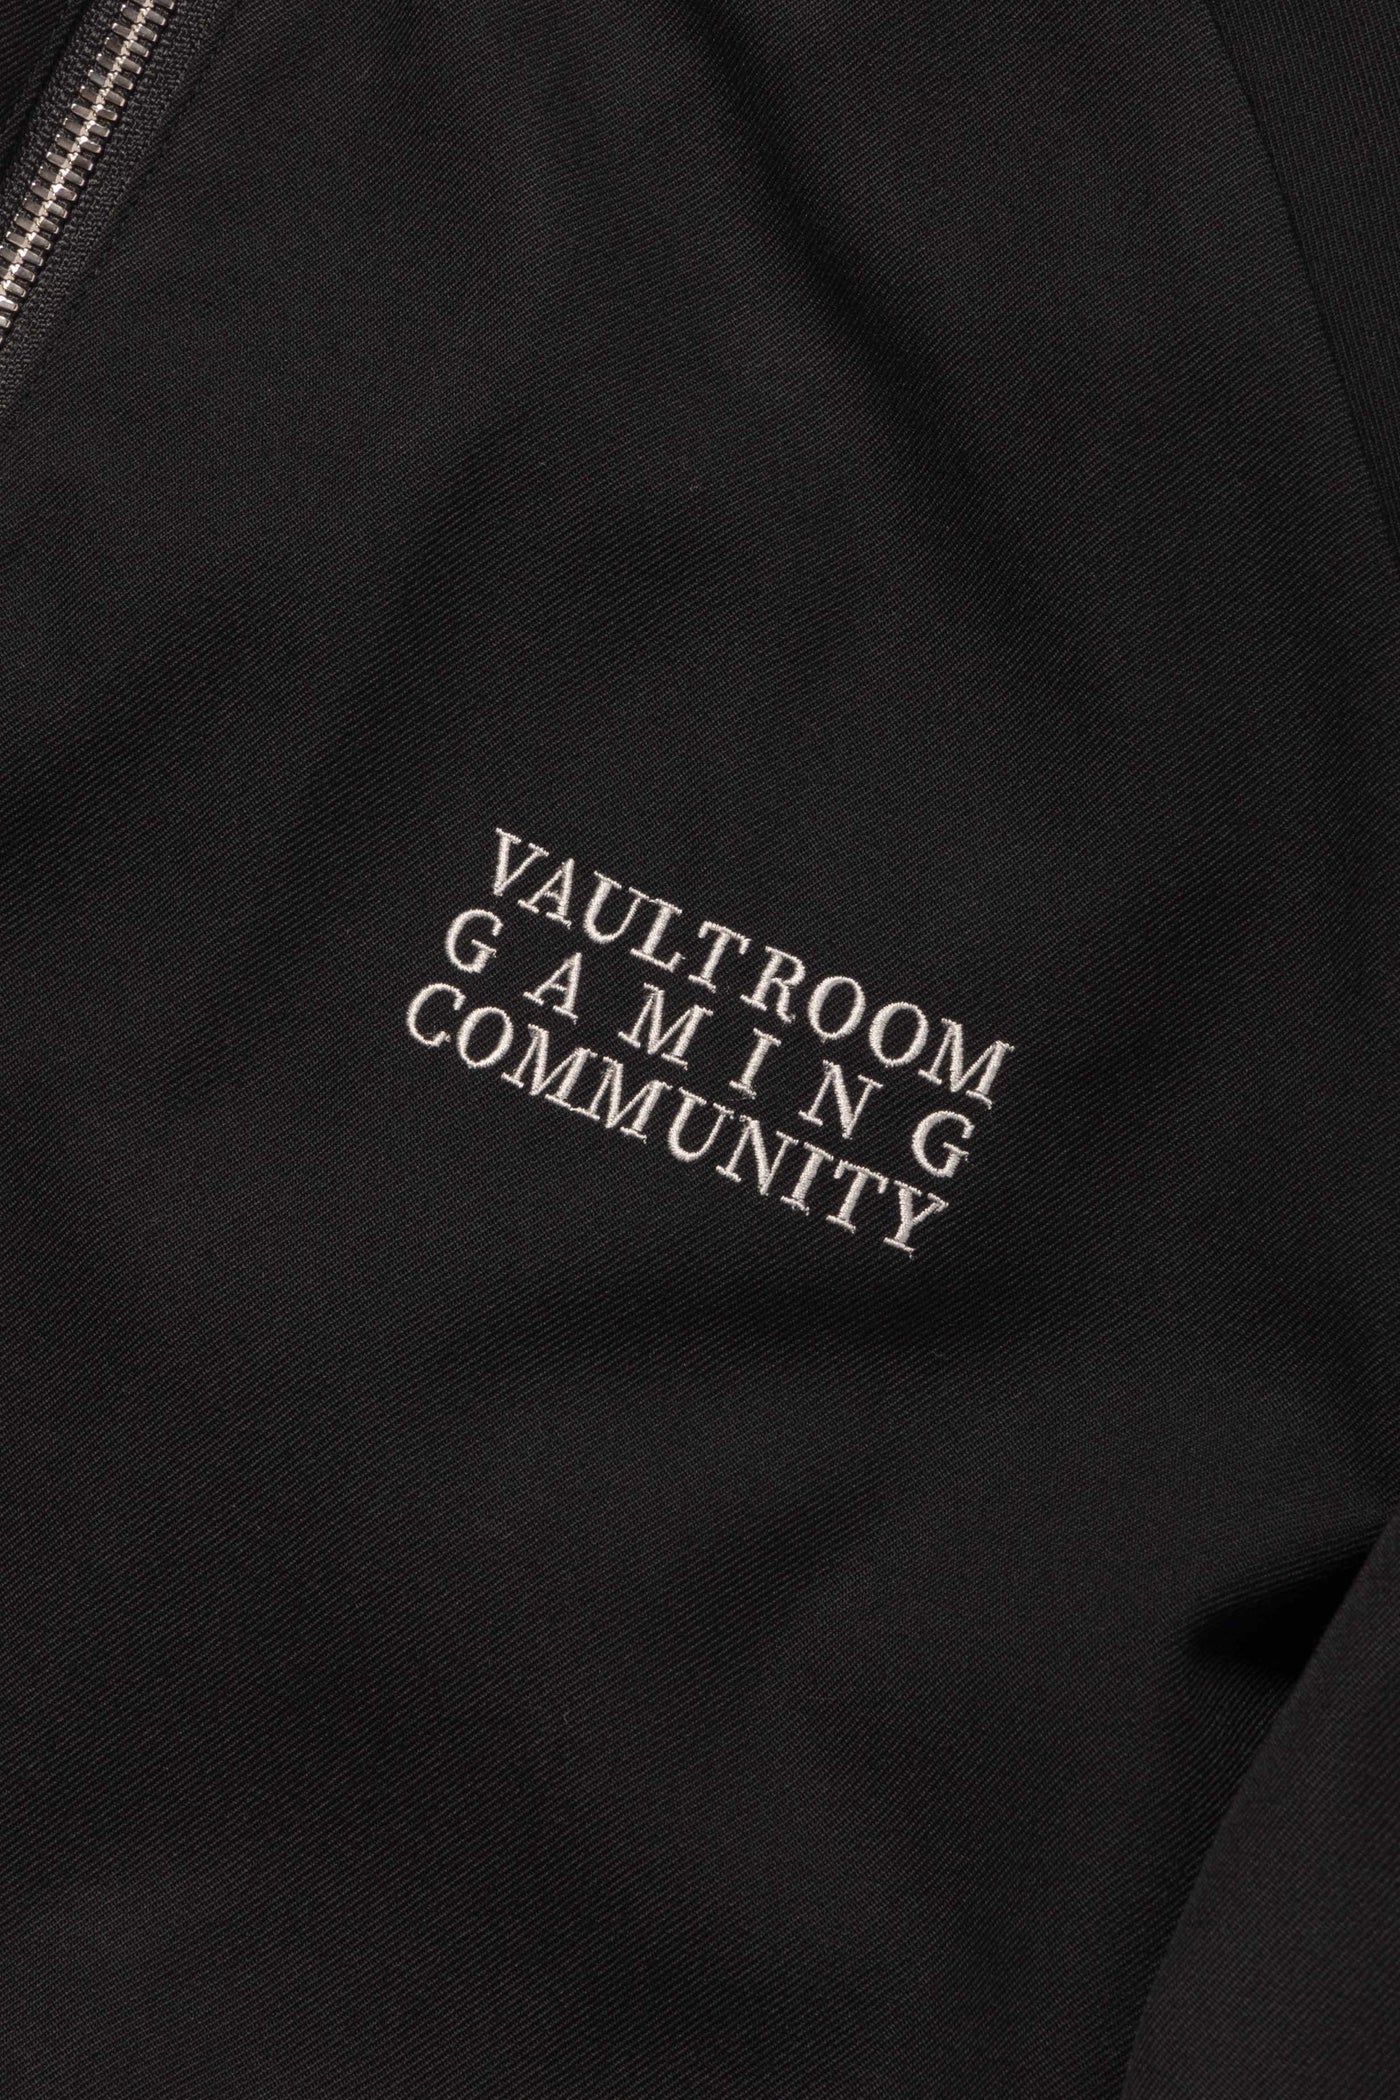 【大幅値下げ中】vaultroom VGC JACKET